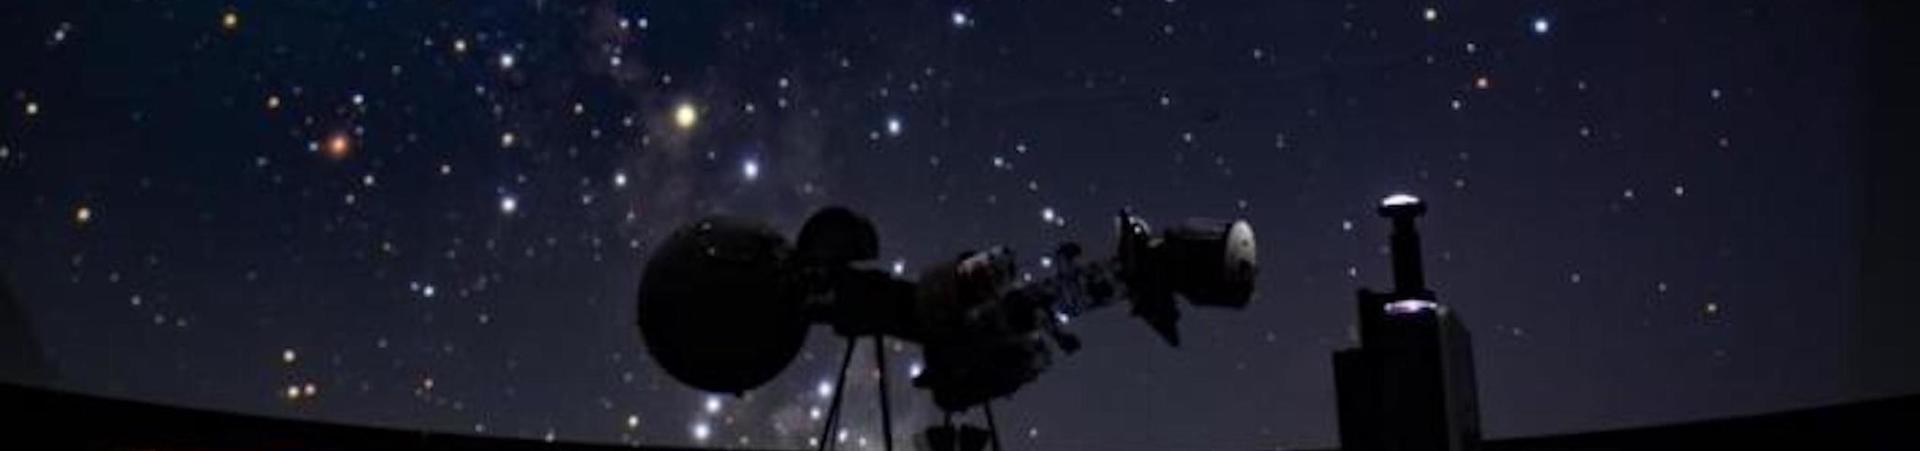 telescope and night sky